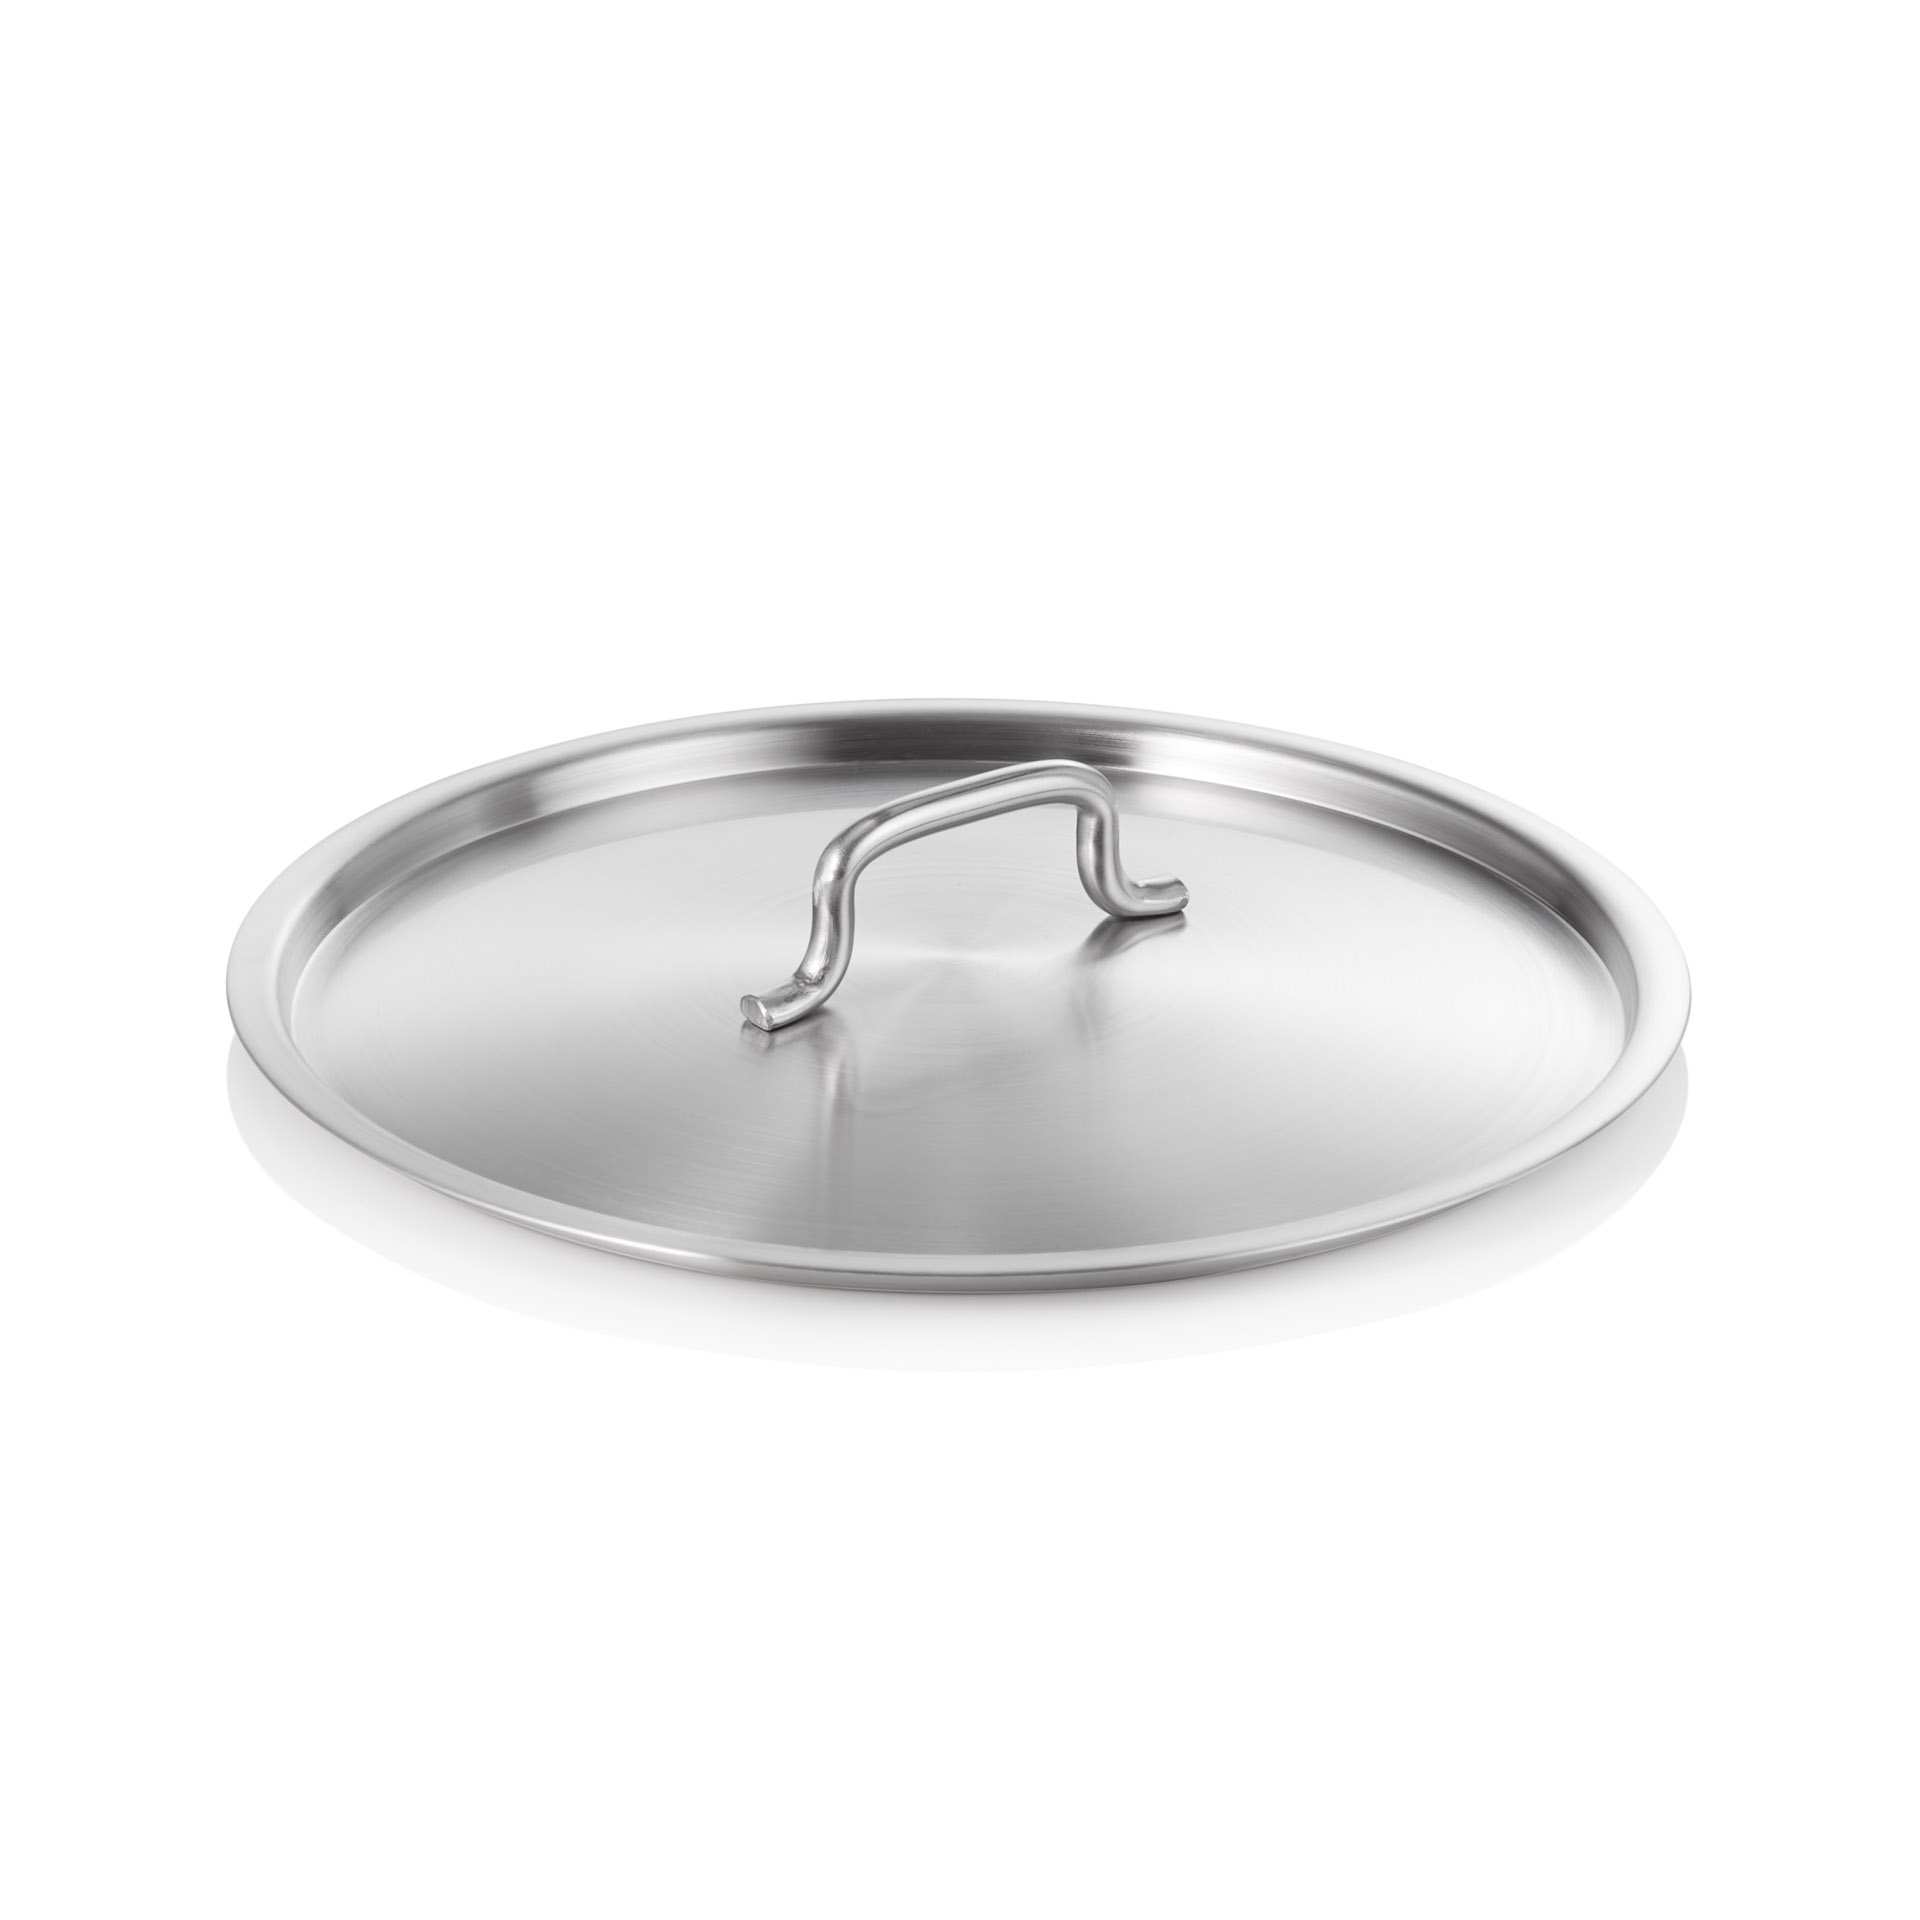 Deckel - Serie Cookware - rund - Ø 24 cm - Chromnickelstahl - 2161240-A